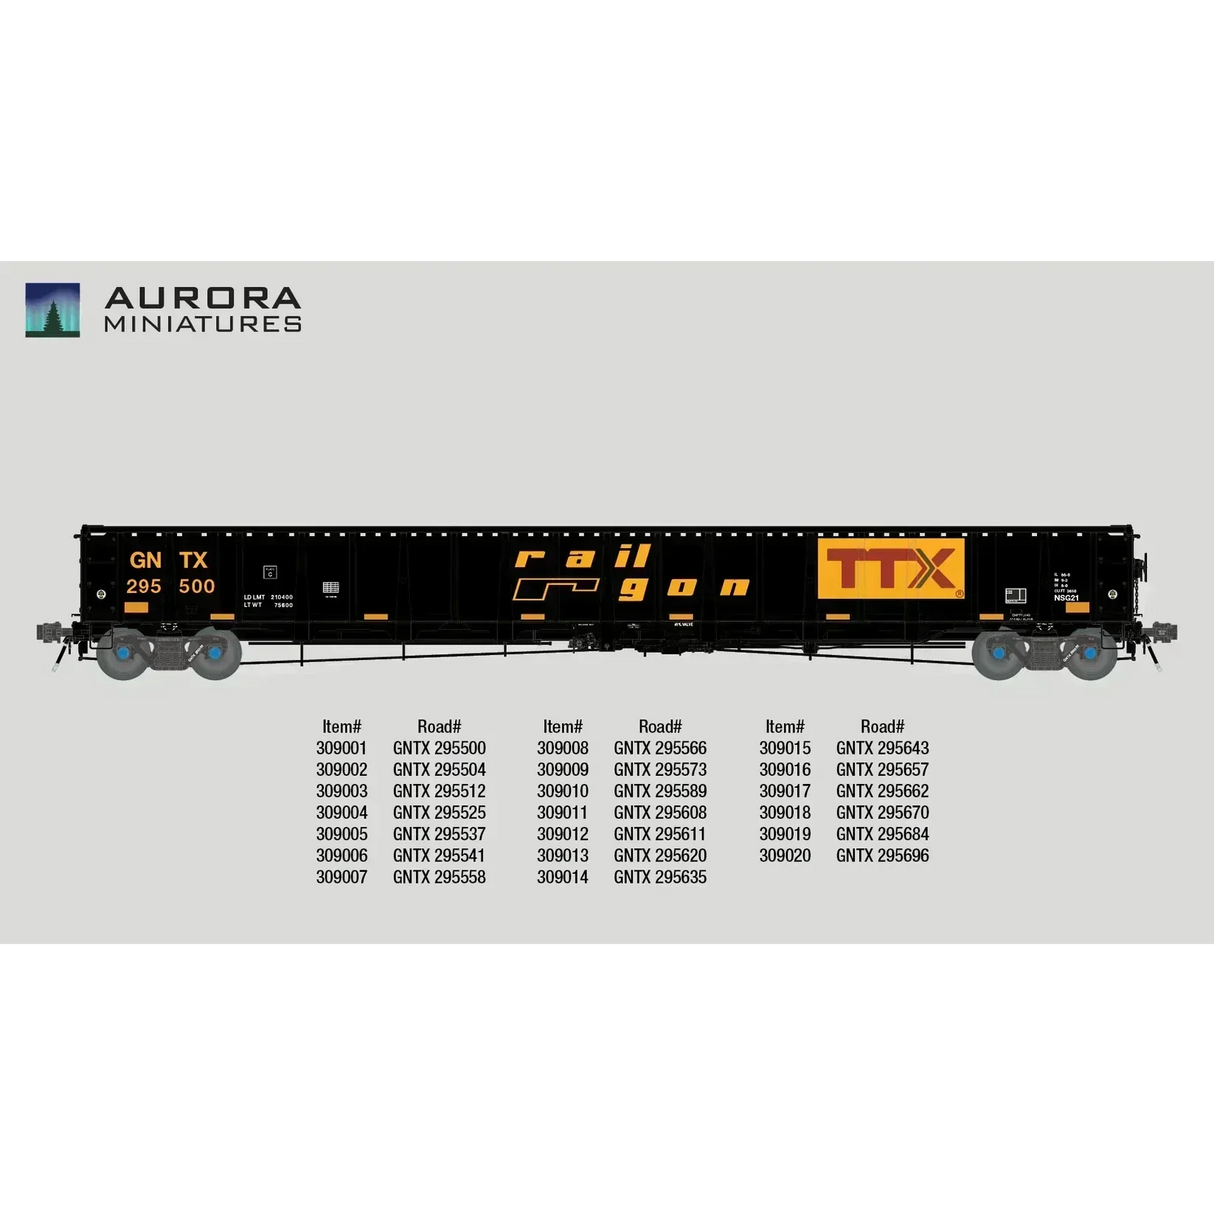 Aurora Miniatures HO Scale National Steel Car 3650 cf 66’ ‘Railgon’ Gondola 295696